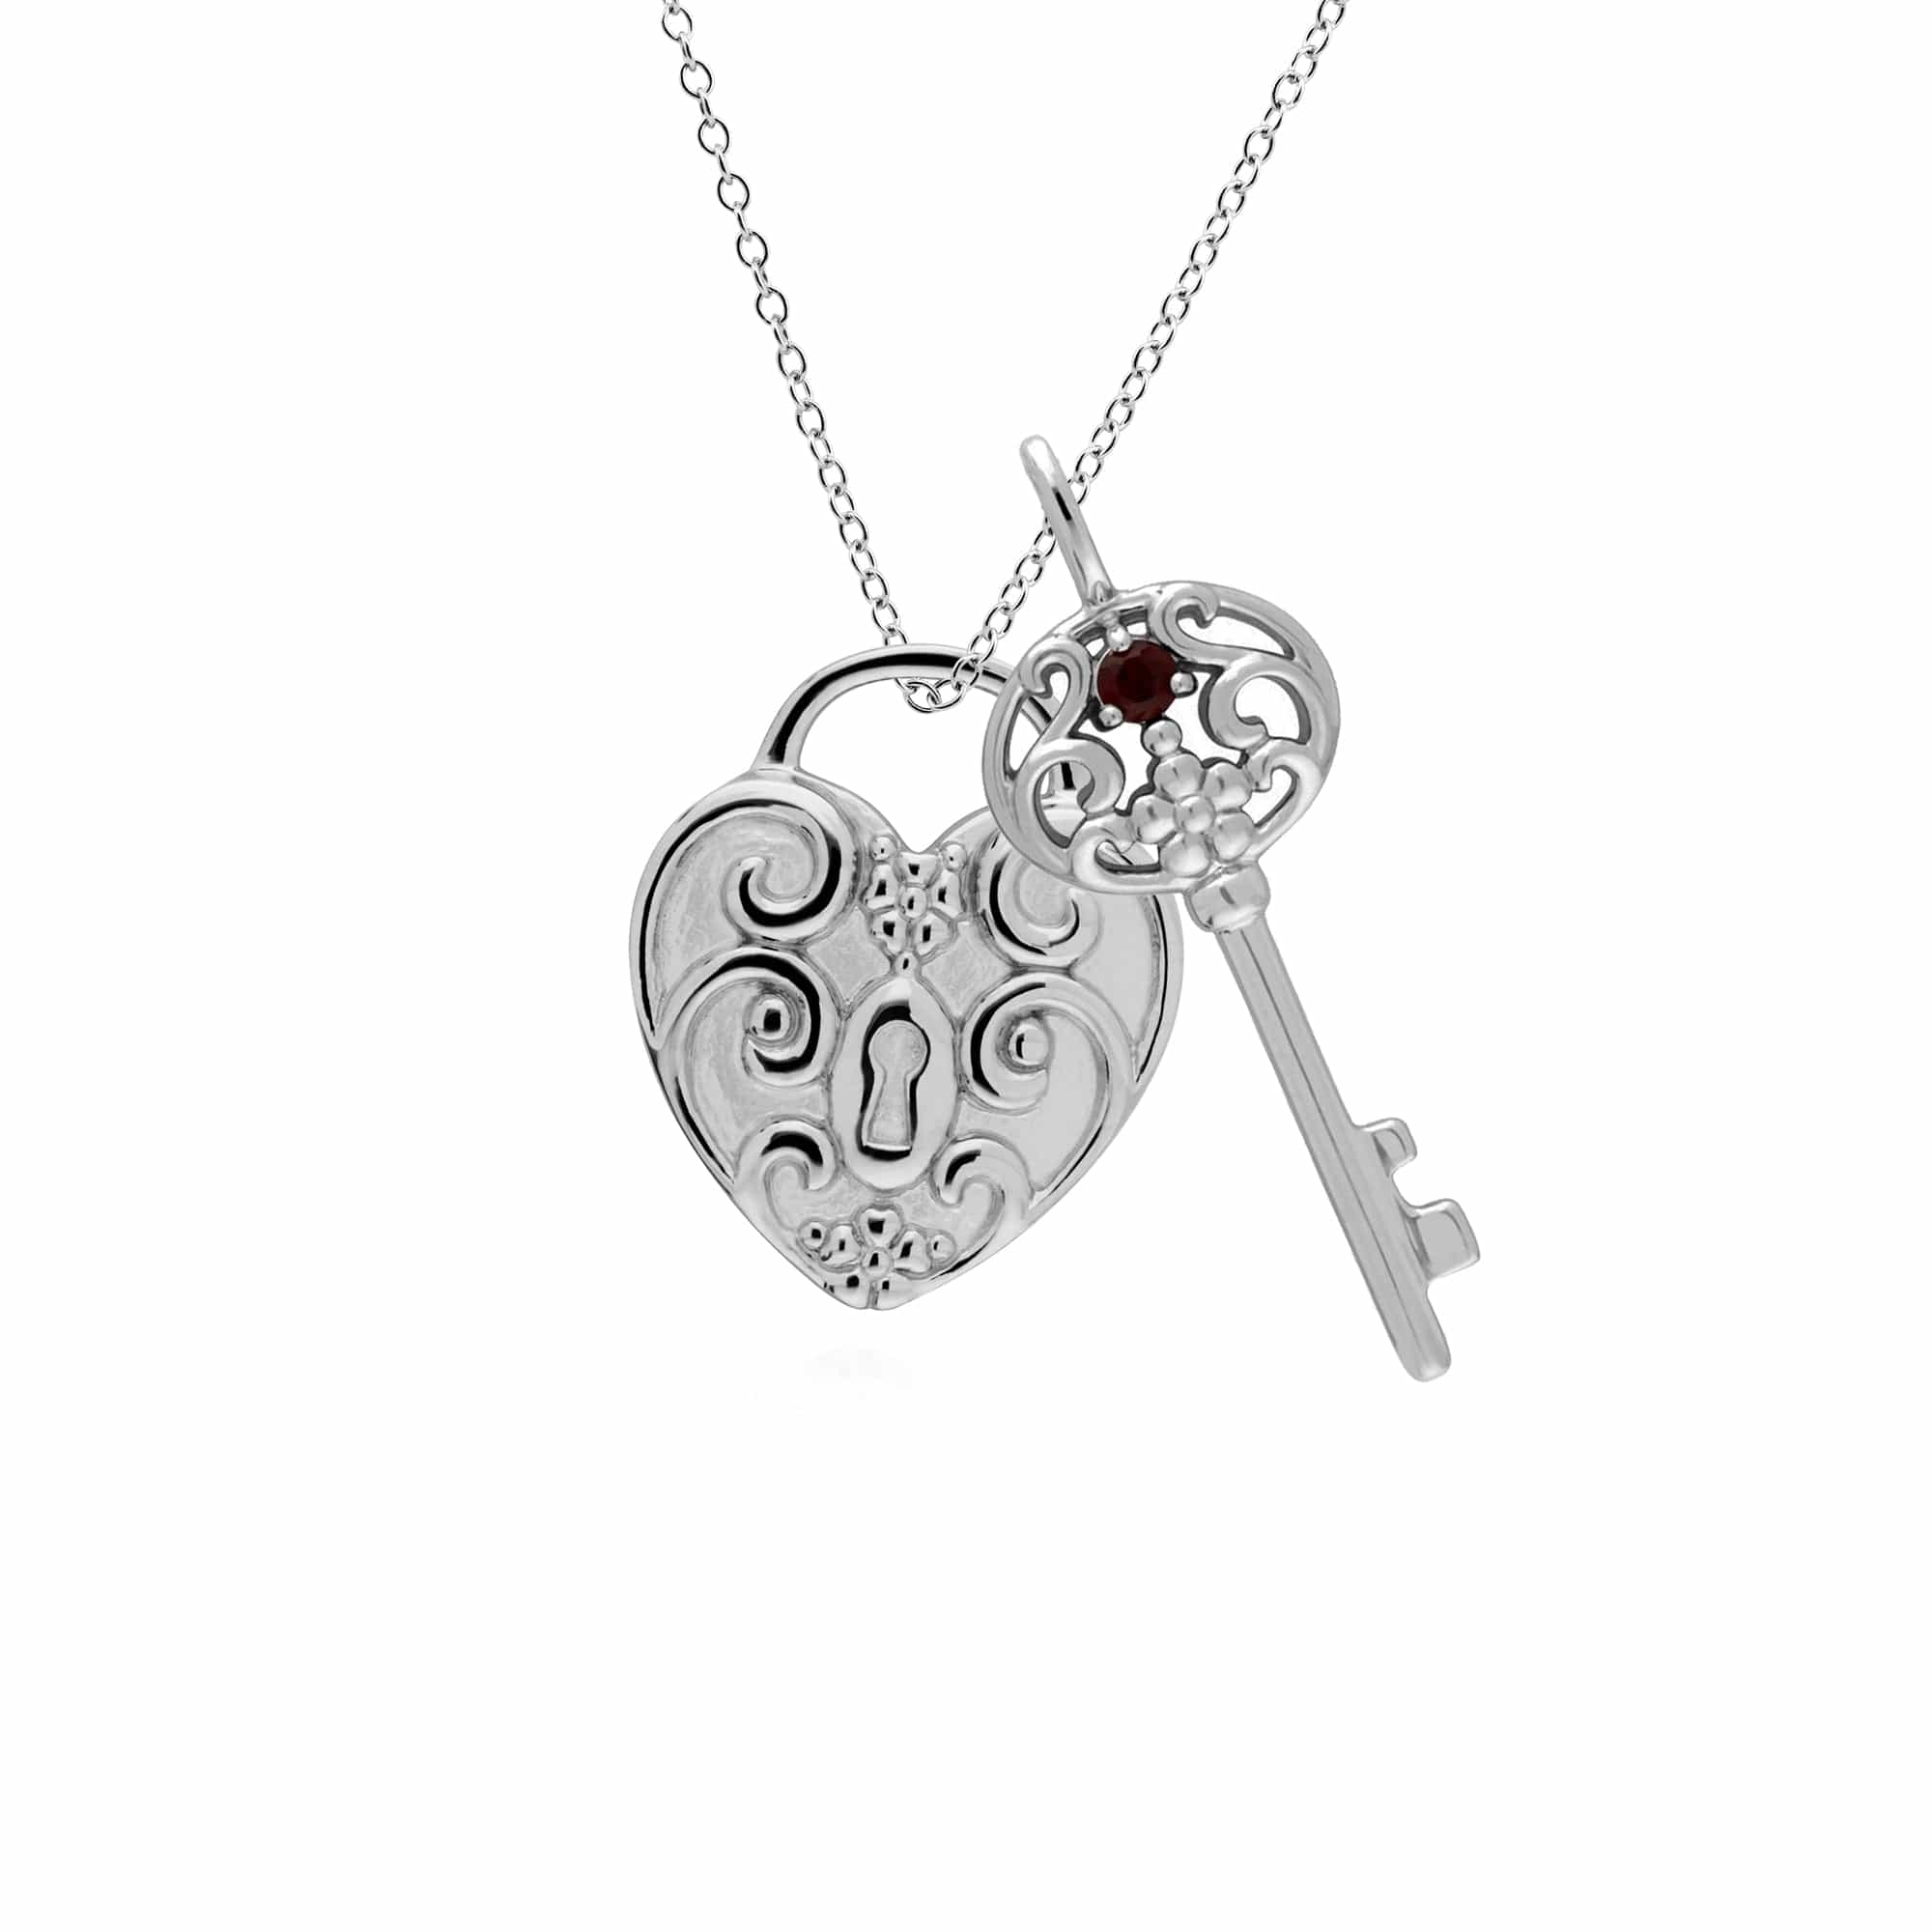 270P026801925-270P026601925 Classic Swirl Heart Lock Pendant & Garnet Big Key Charm in 925 Sterling Silver 1